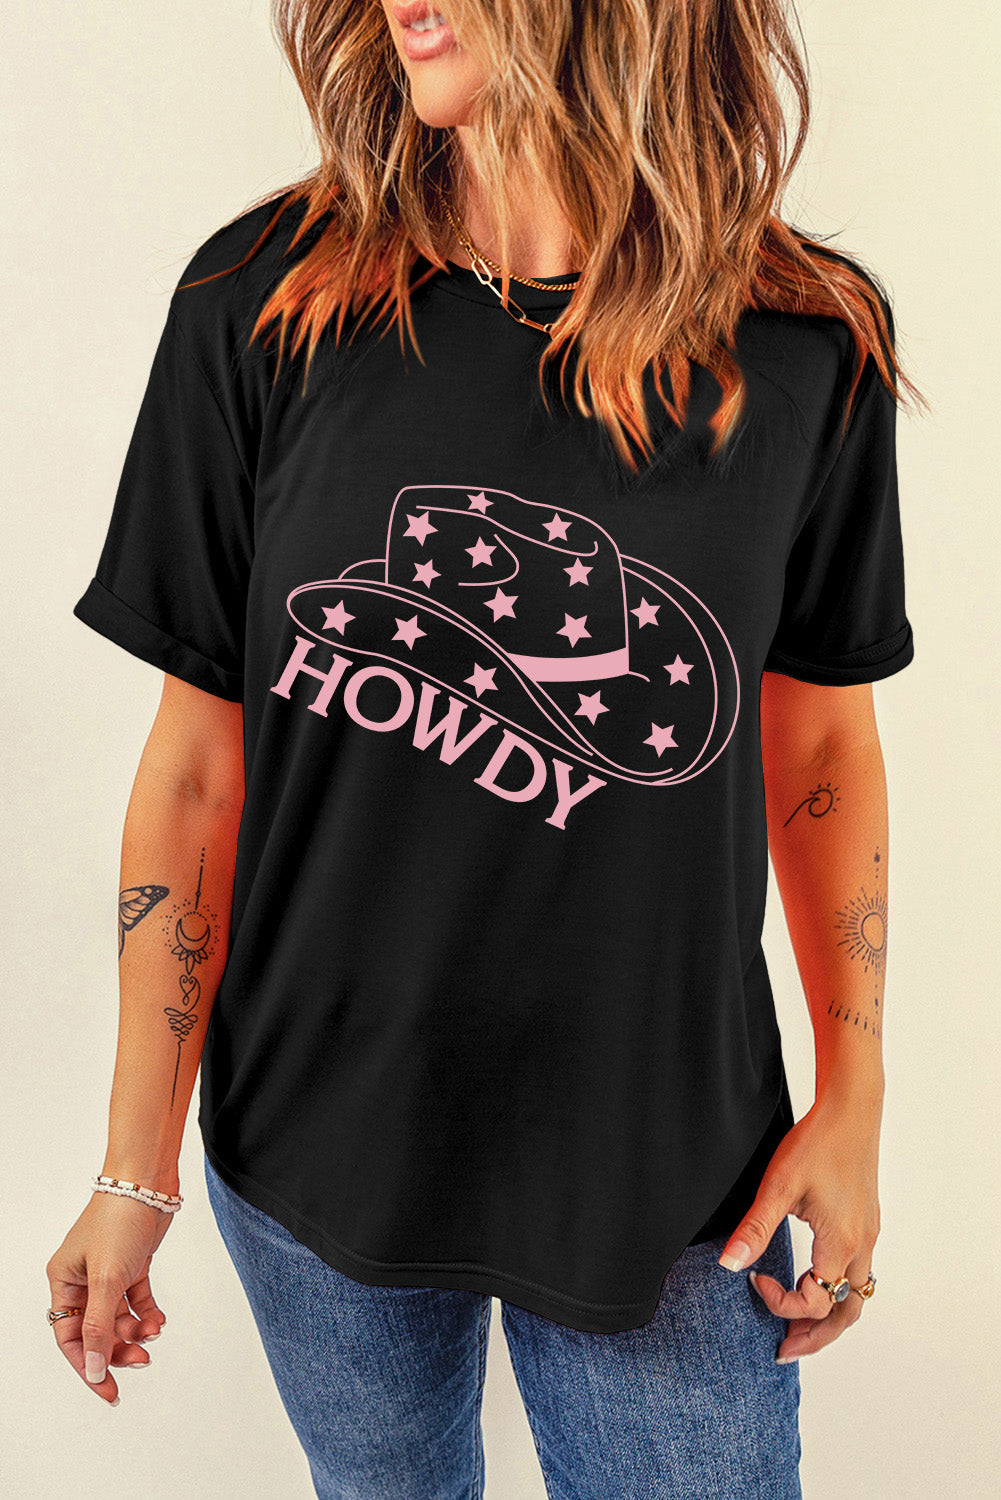 Black Cowboy Hat HOWDY Graphic T Shirt Graphic Tees JT's Designer Fashion